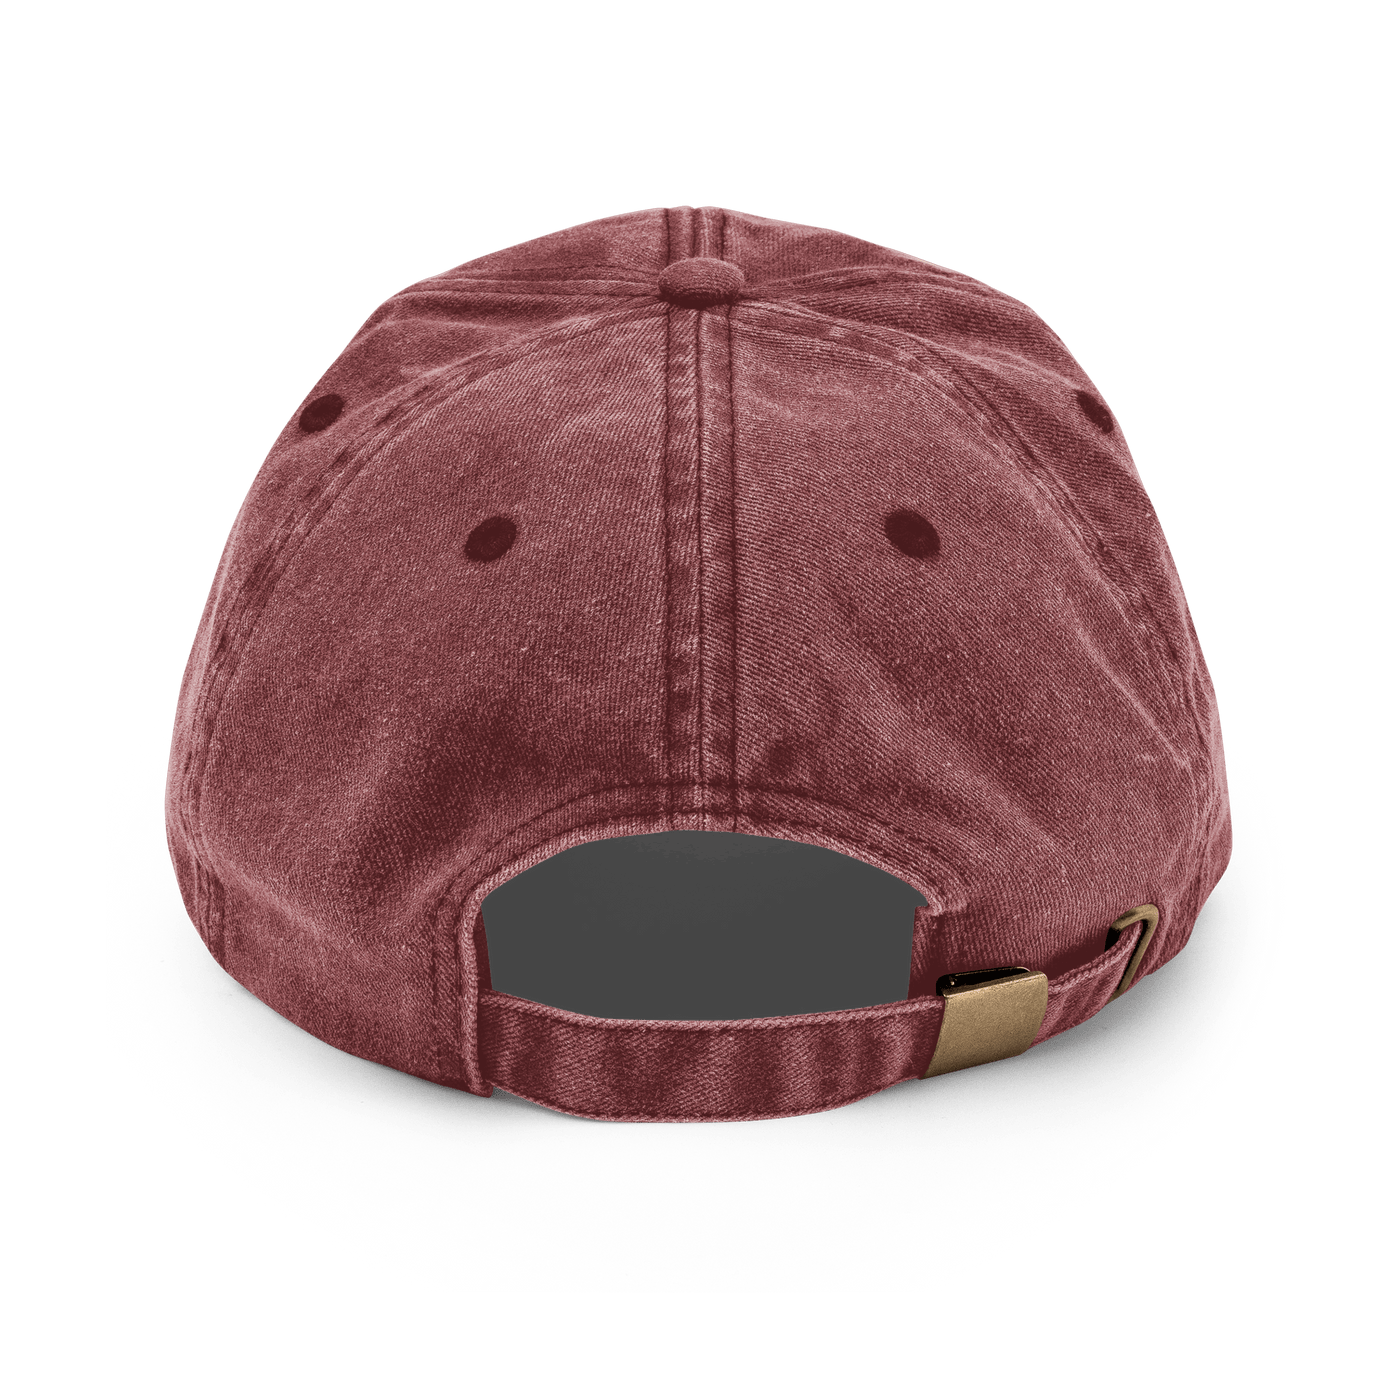 FAKE Vintage Hat - Vintage Denim - - Just Another Cap Store